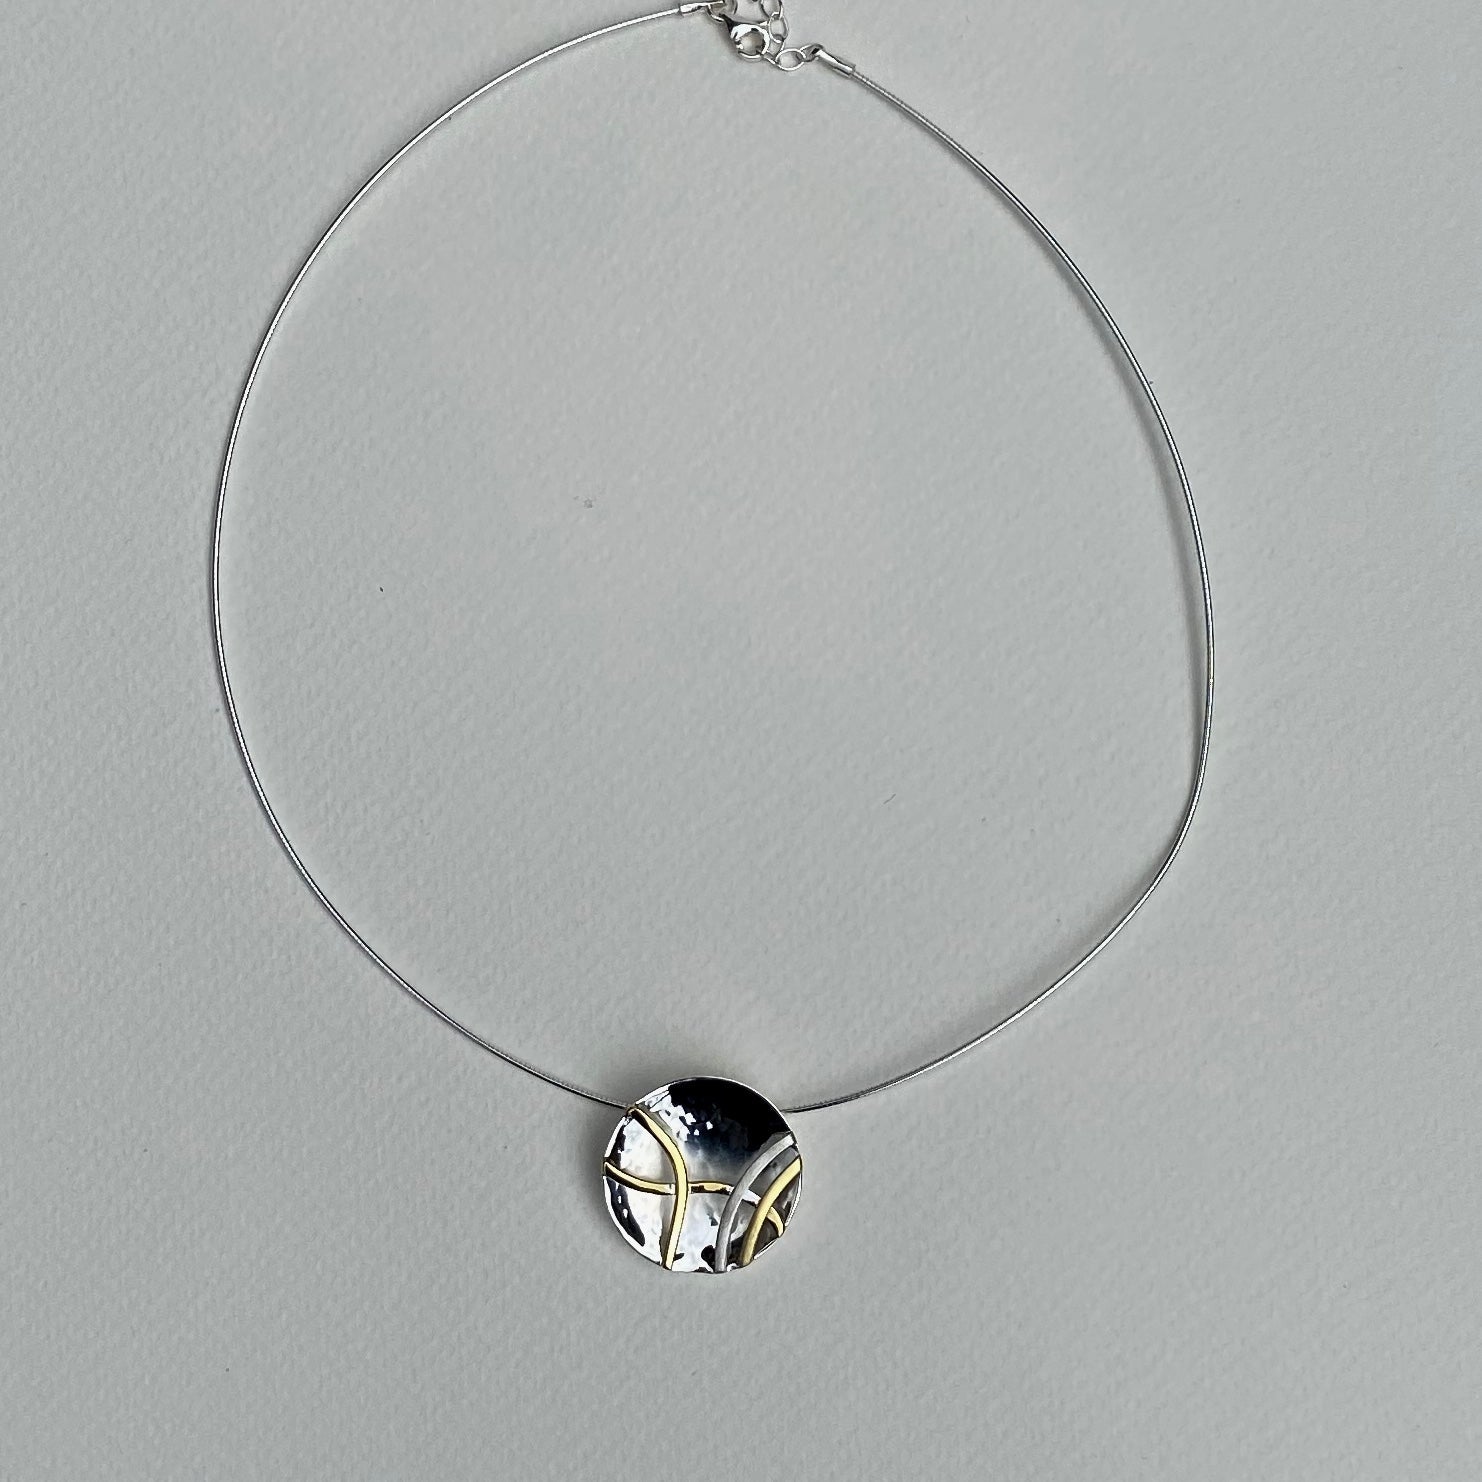 Concave Disc Necklace - The Nancy Smillie Shop - Art, Jewellery & Designer Gifts Glasgow